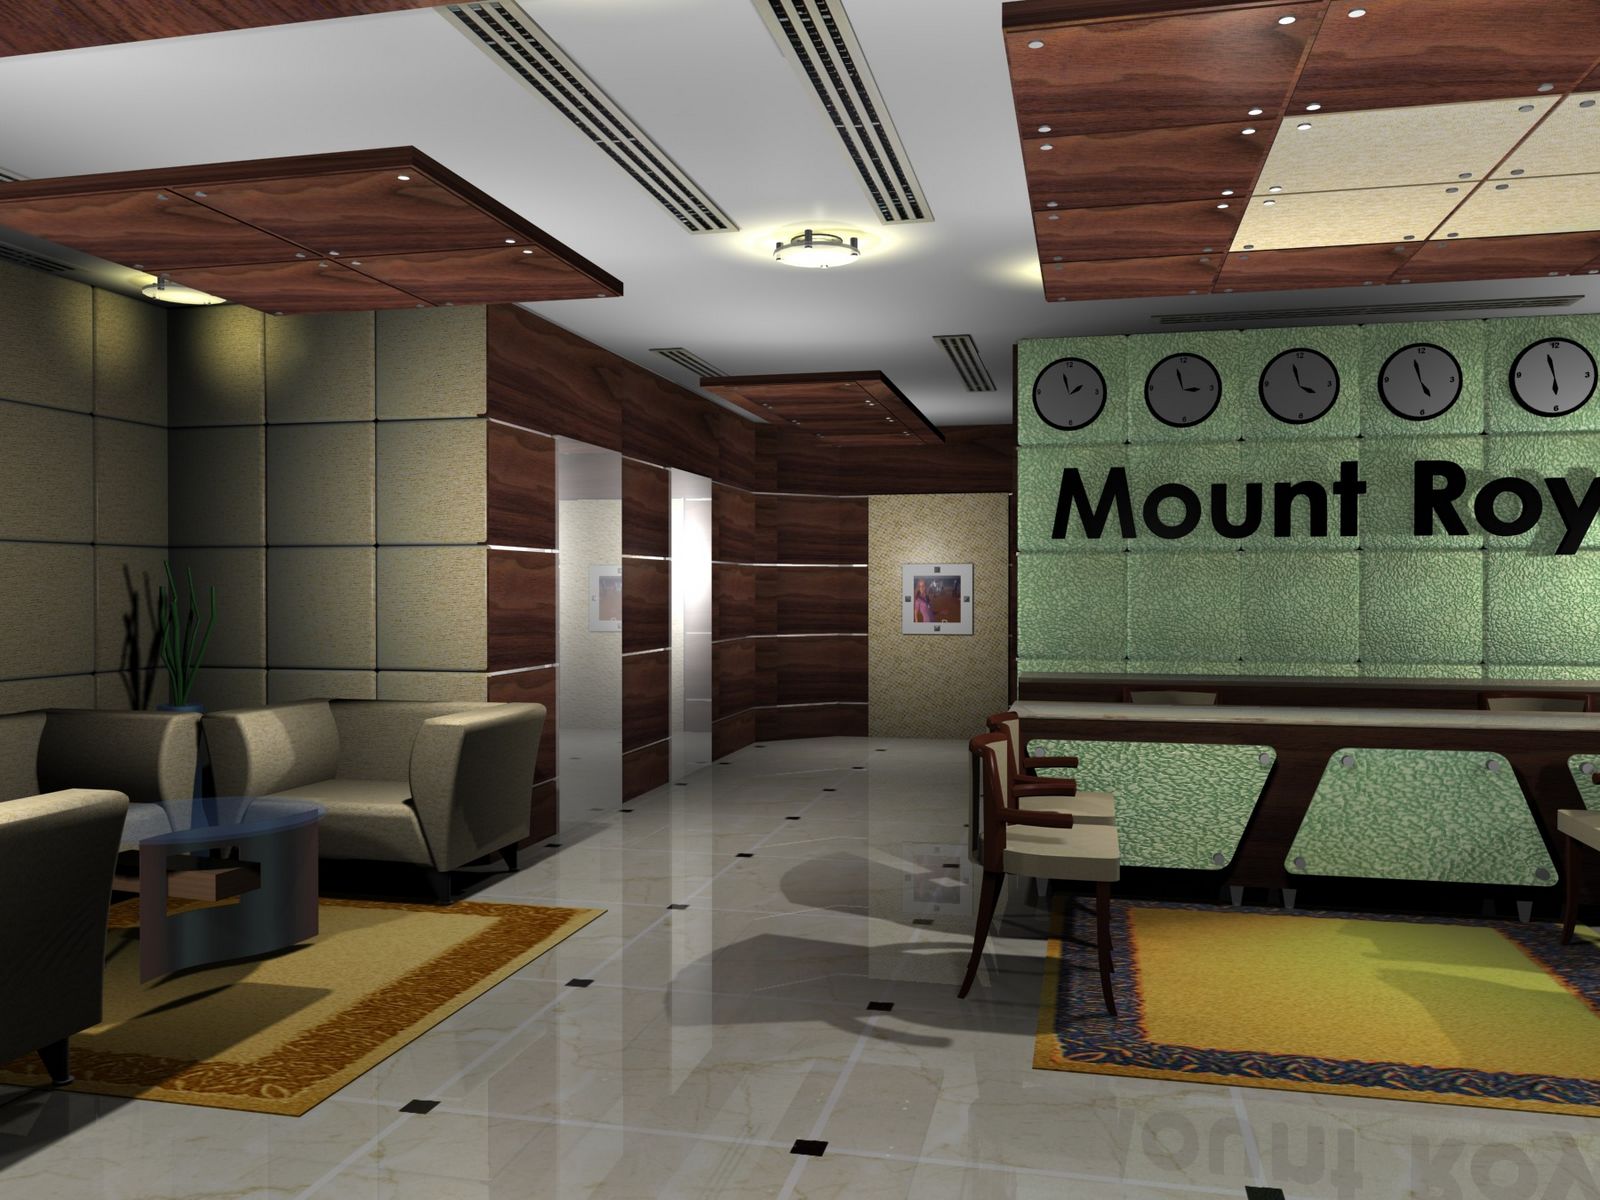 Gurooji Design: Mont Royal - Hotel lobby design